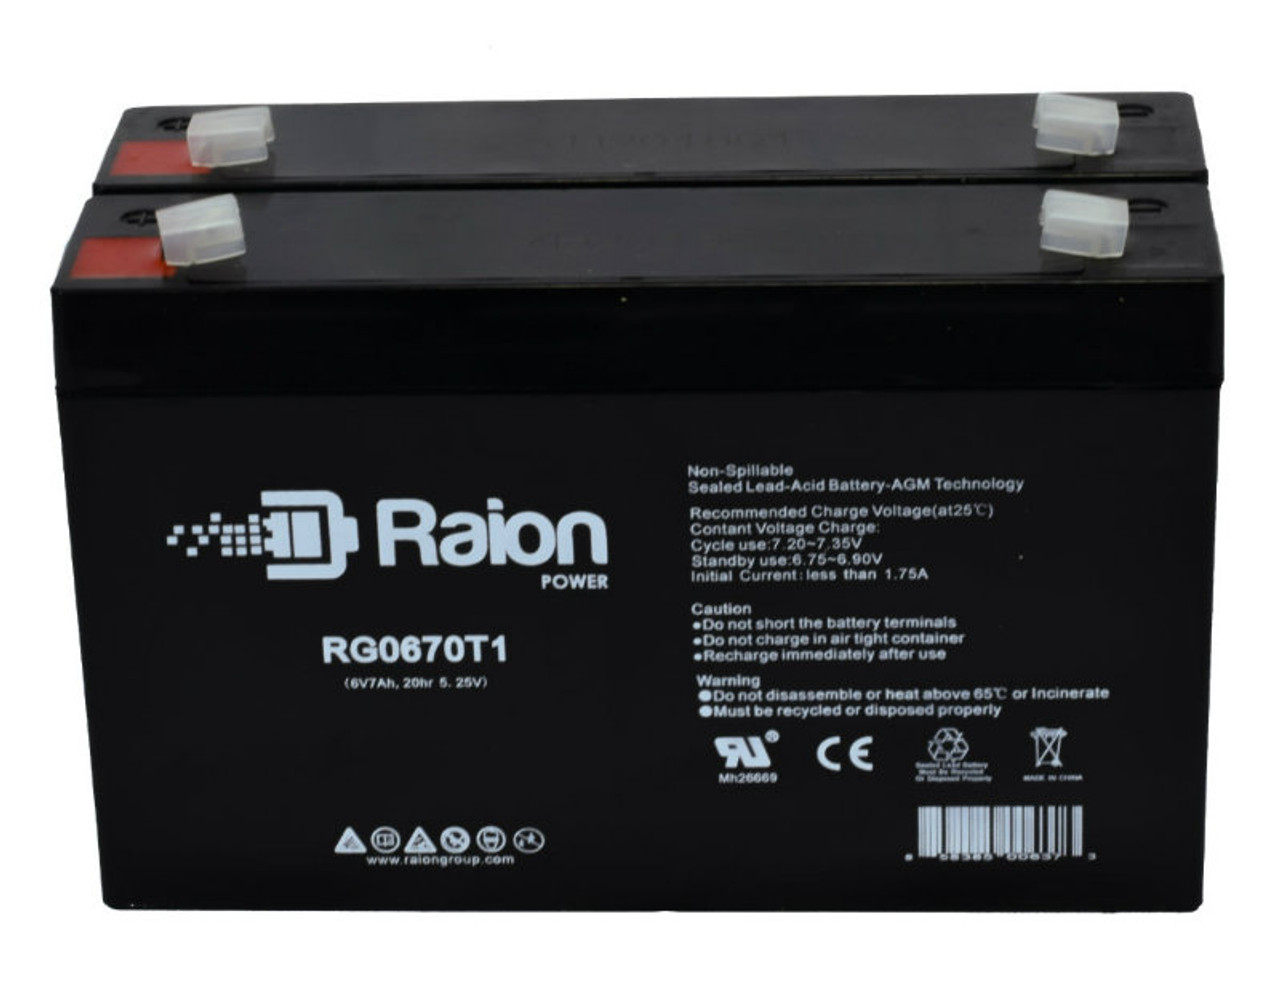 Raion Power RG0670T1 6V 7Ah Replacement Emergency Light Battery for Prescolite E8191-6500 - 2 Pack